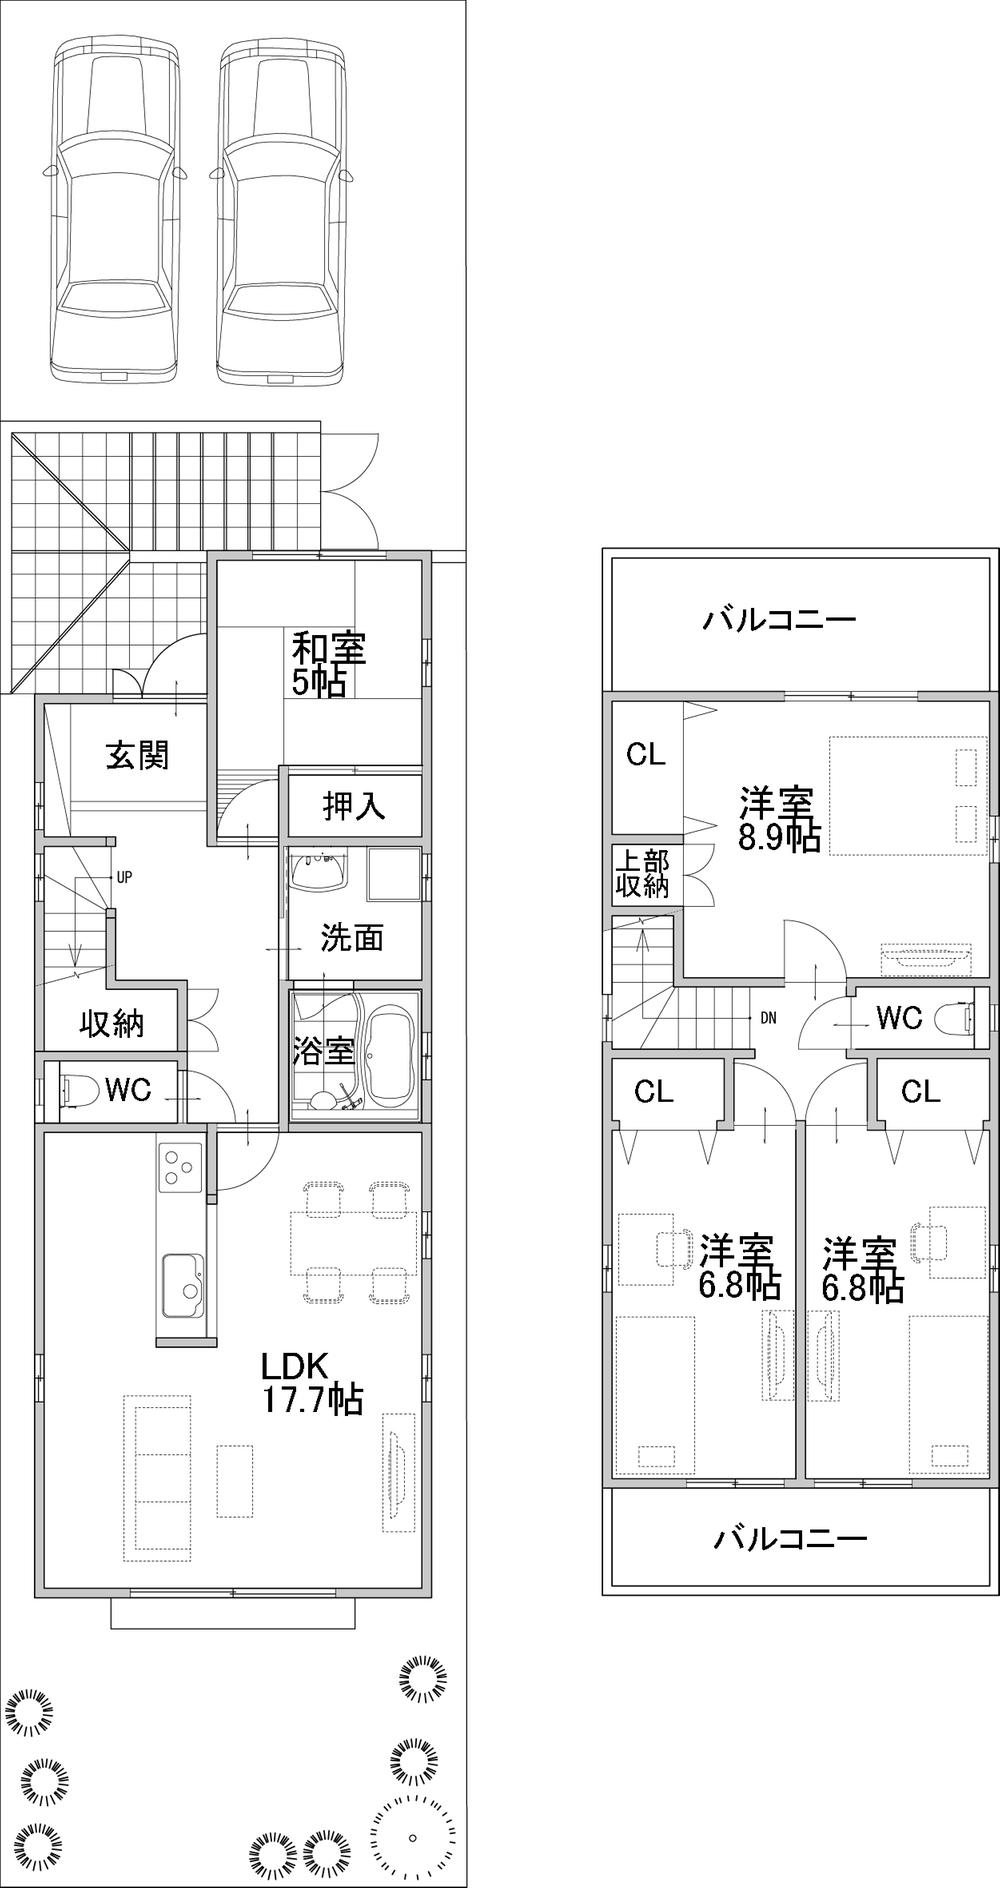 Building plan example (floor plan). Building plan example 4LDK, Land price 30,360,000 yen, Land area 142.27 sq m , Building price 19,440,000 yen, Building area 110.33 sq m